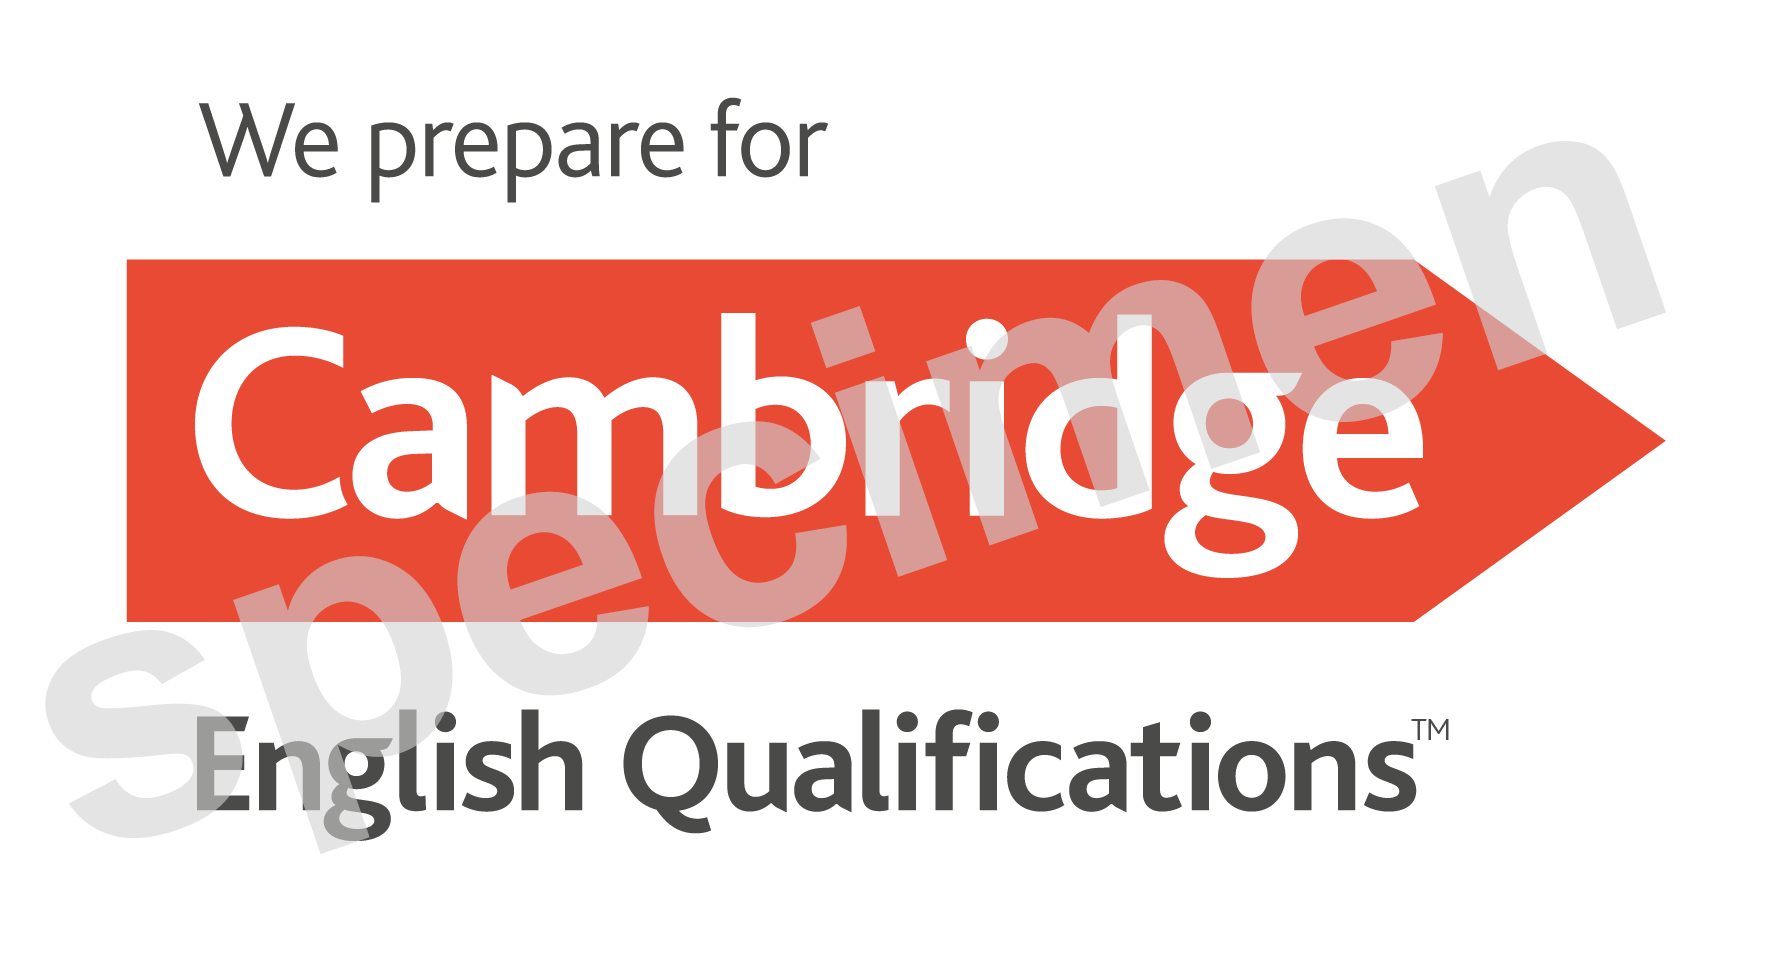 Exam Logo - Exam Preparation Logos for Schools - Regulations for Use | Cambridge ...